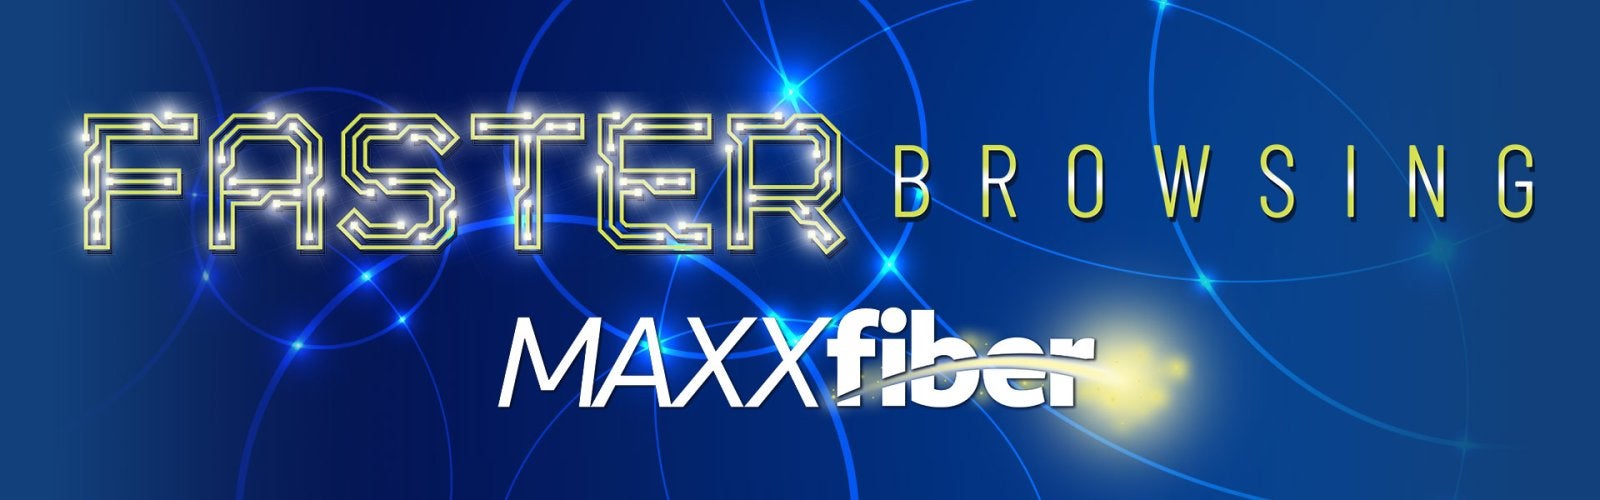 fiber internet near me, fiber internet, gig internet, gig